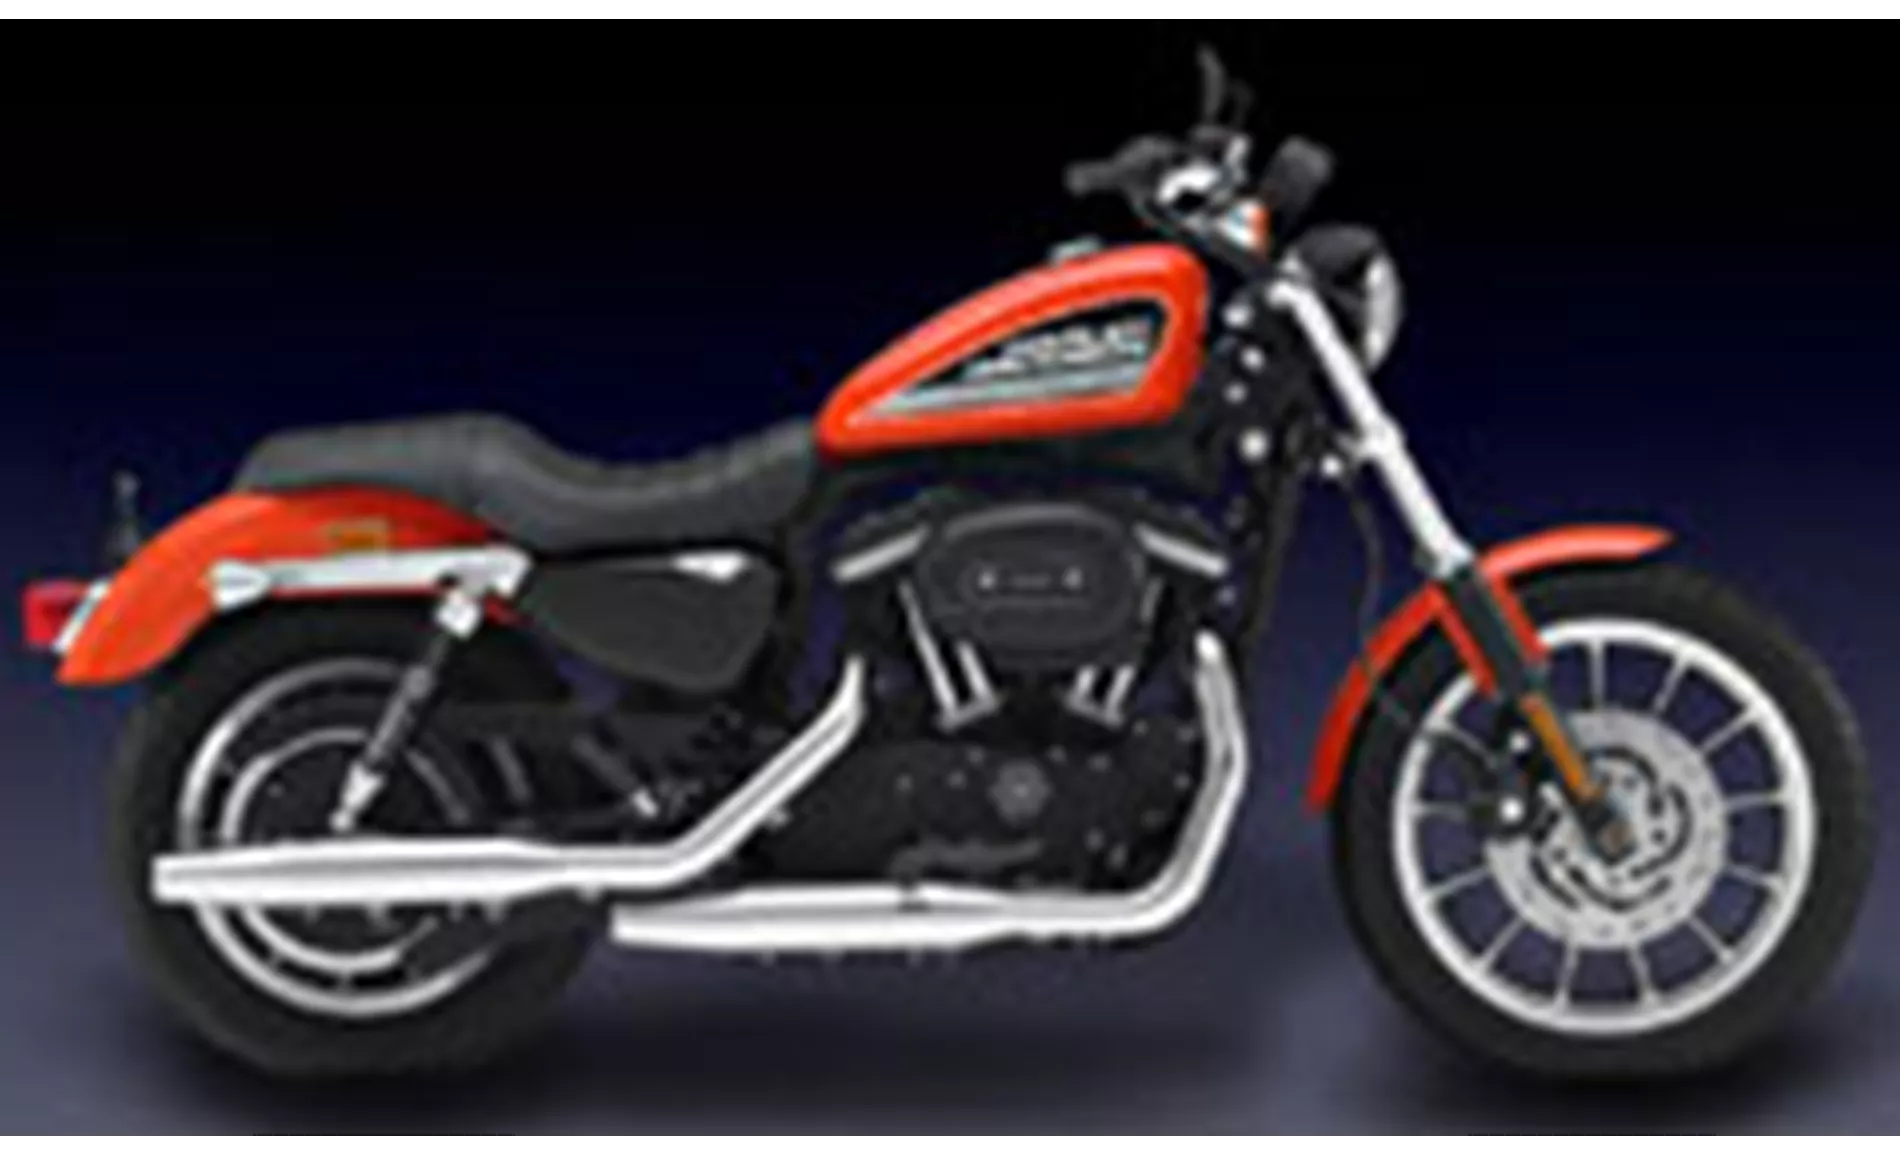 Harley-Davidson Sportster XL 883 R Roadster 2009